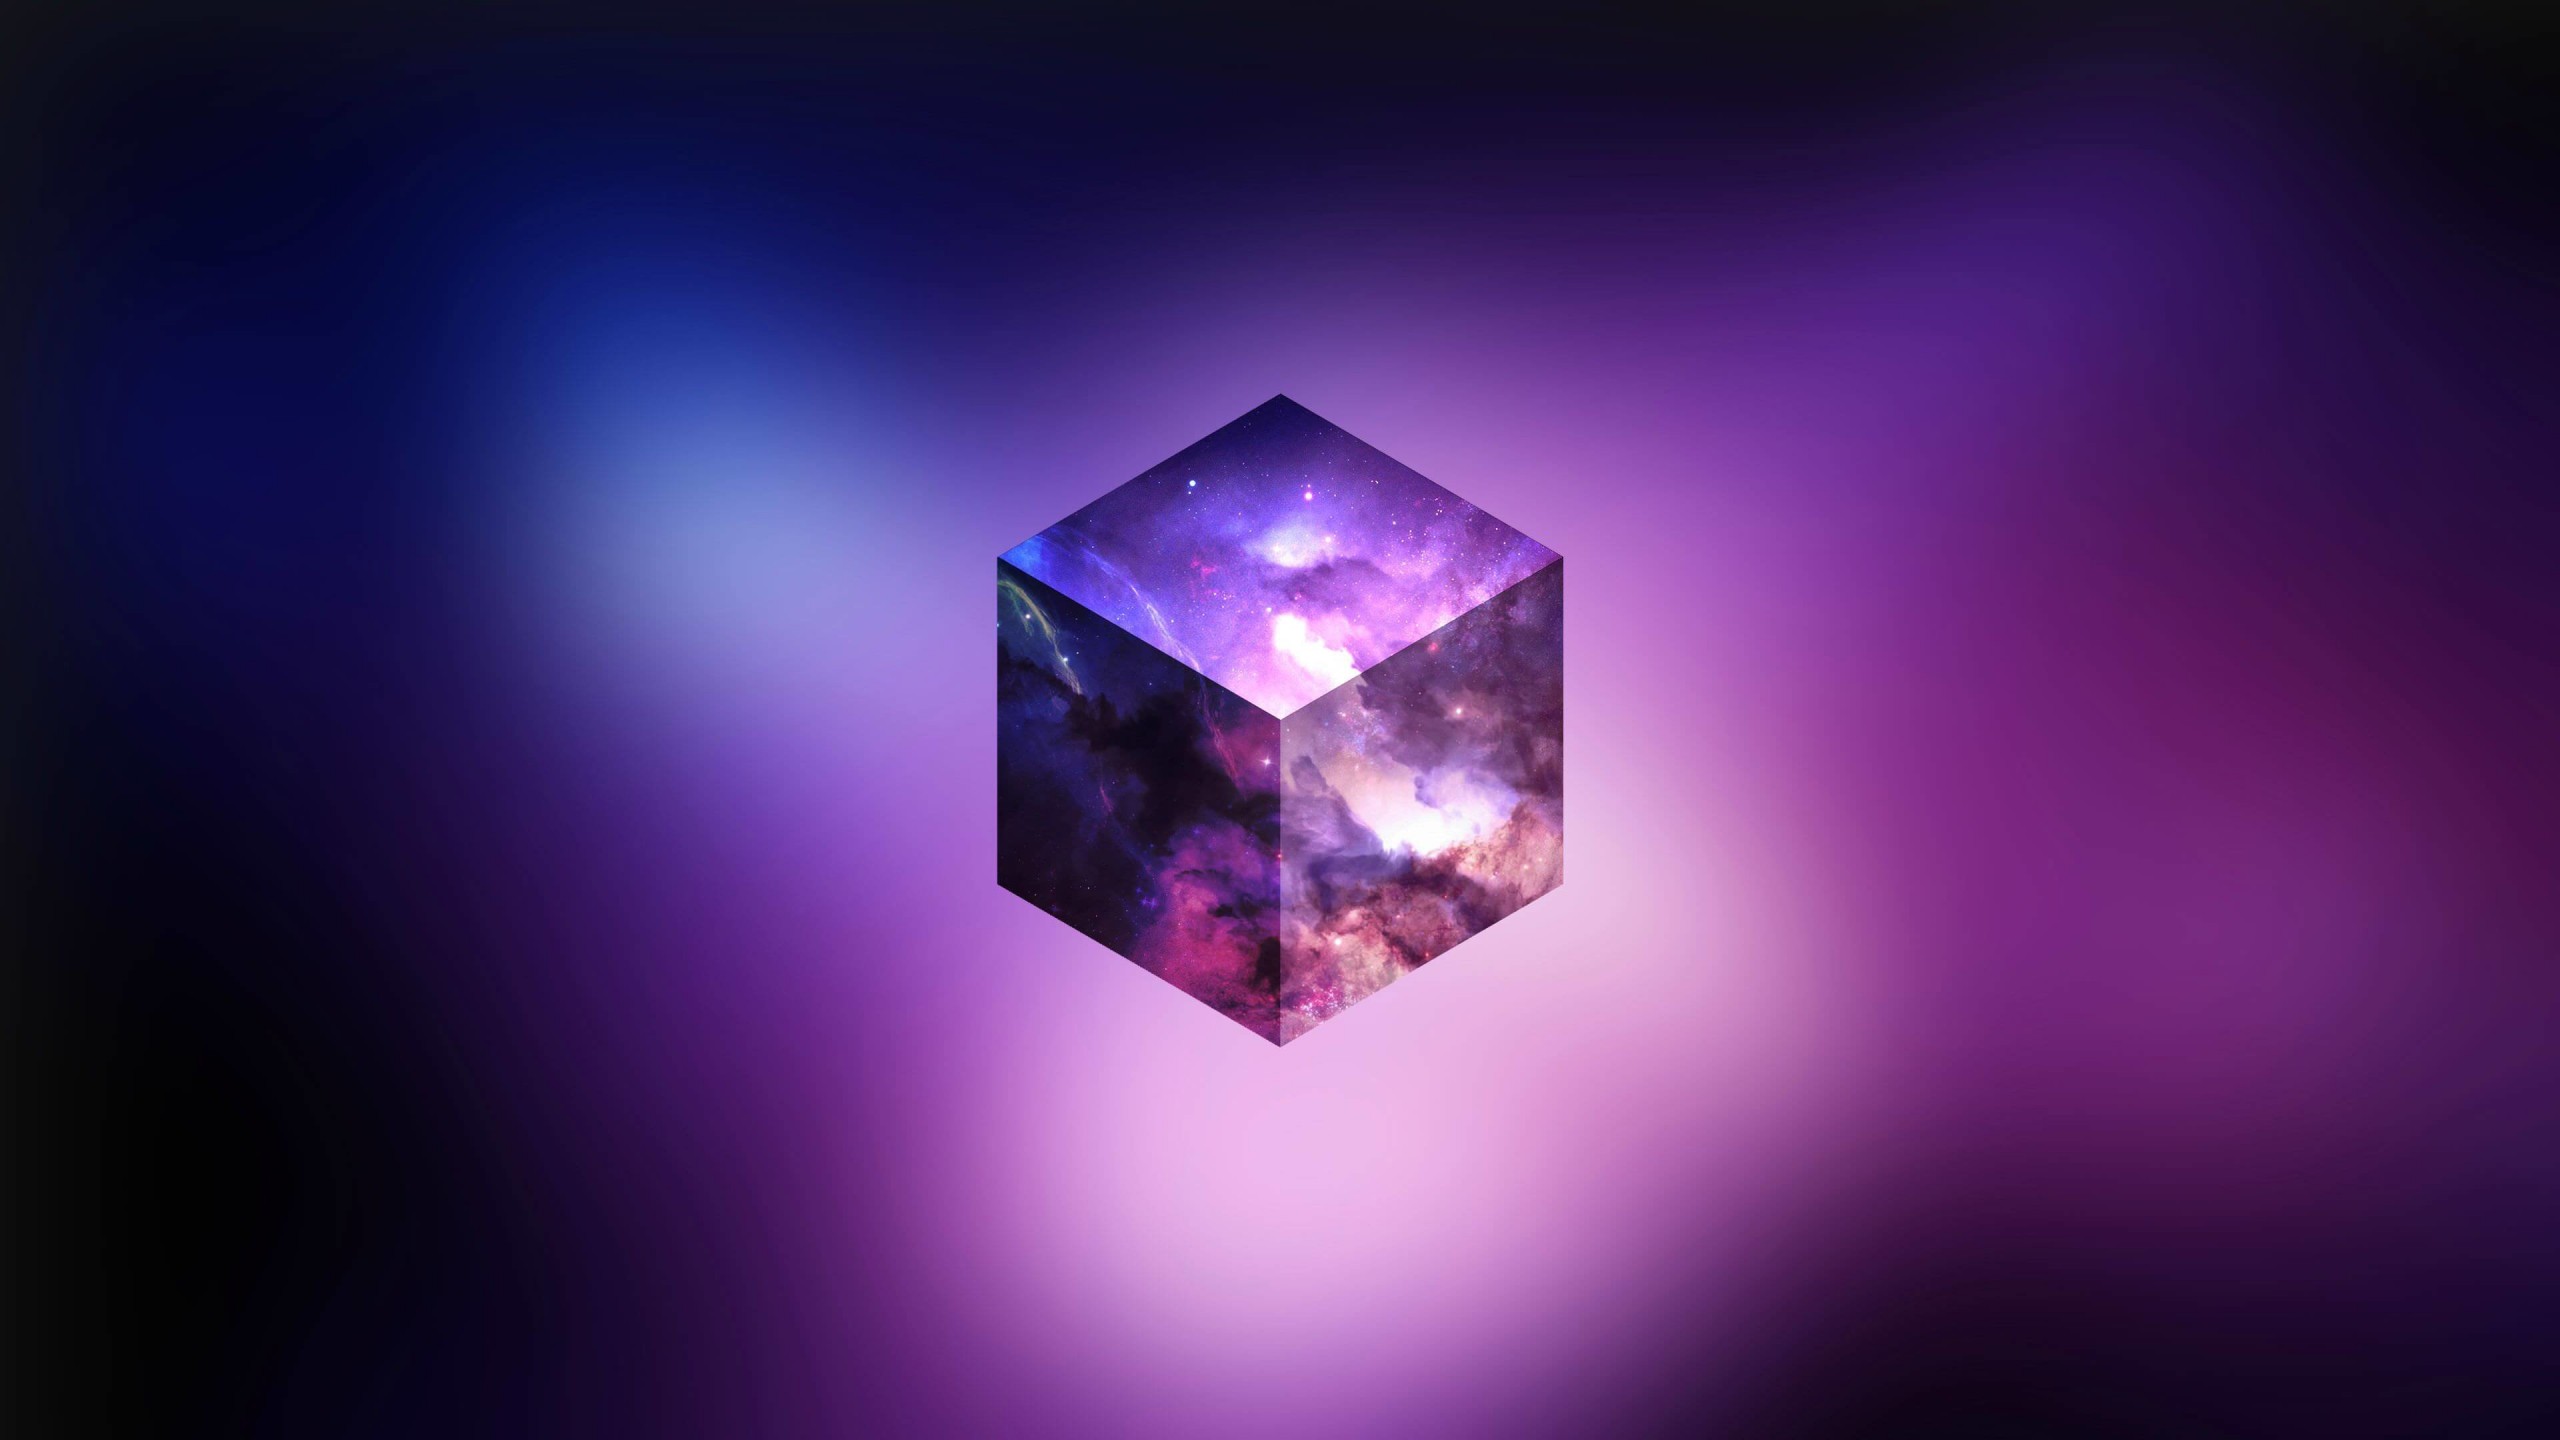 Cosmic Cube Wallpaper for Desktop 2560x1440